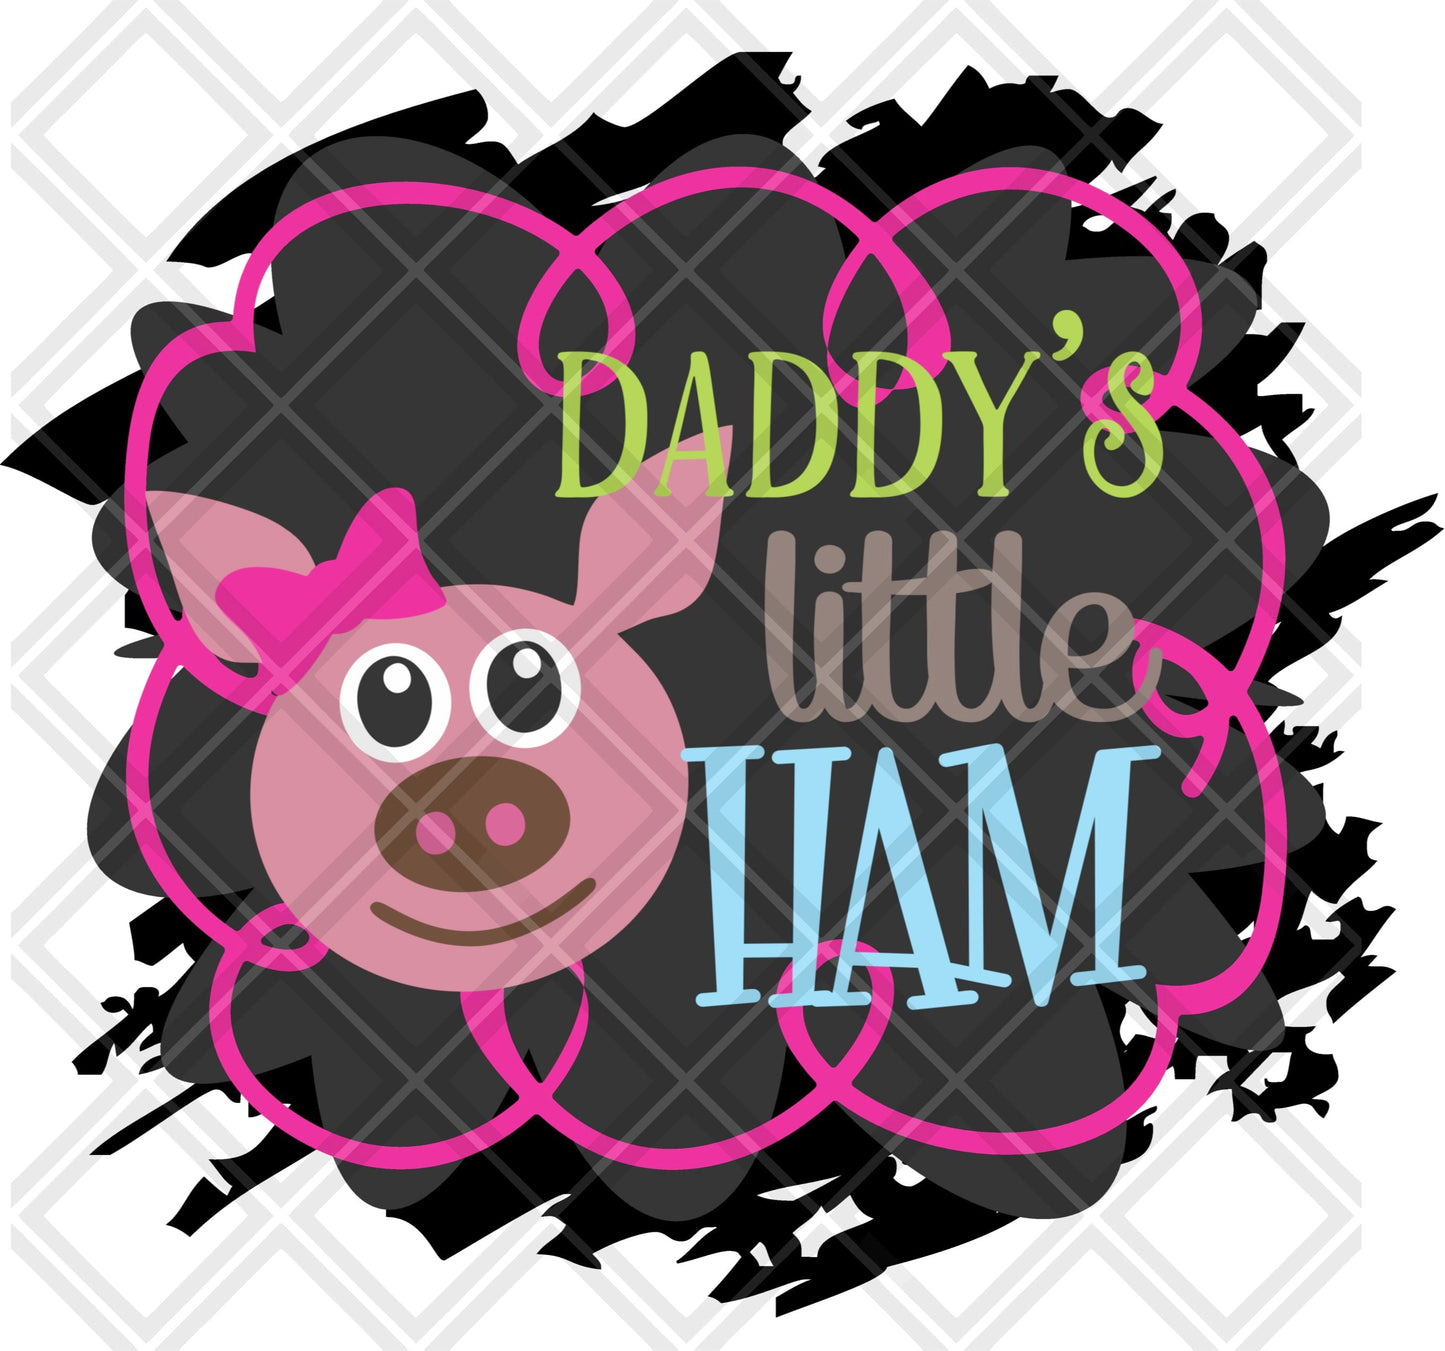 daddy's little ham Digital Download Instand Download